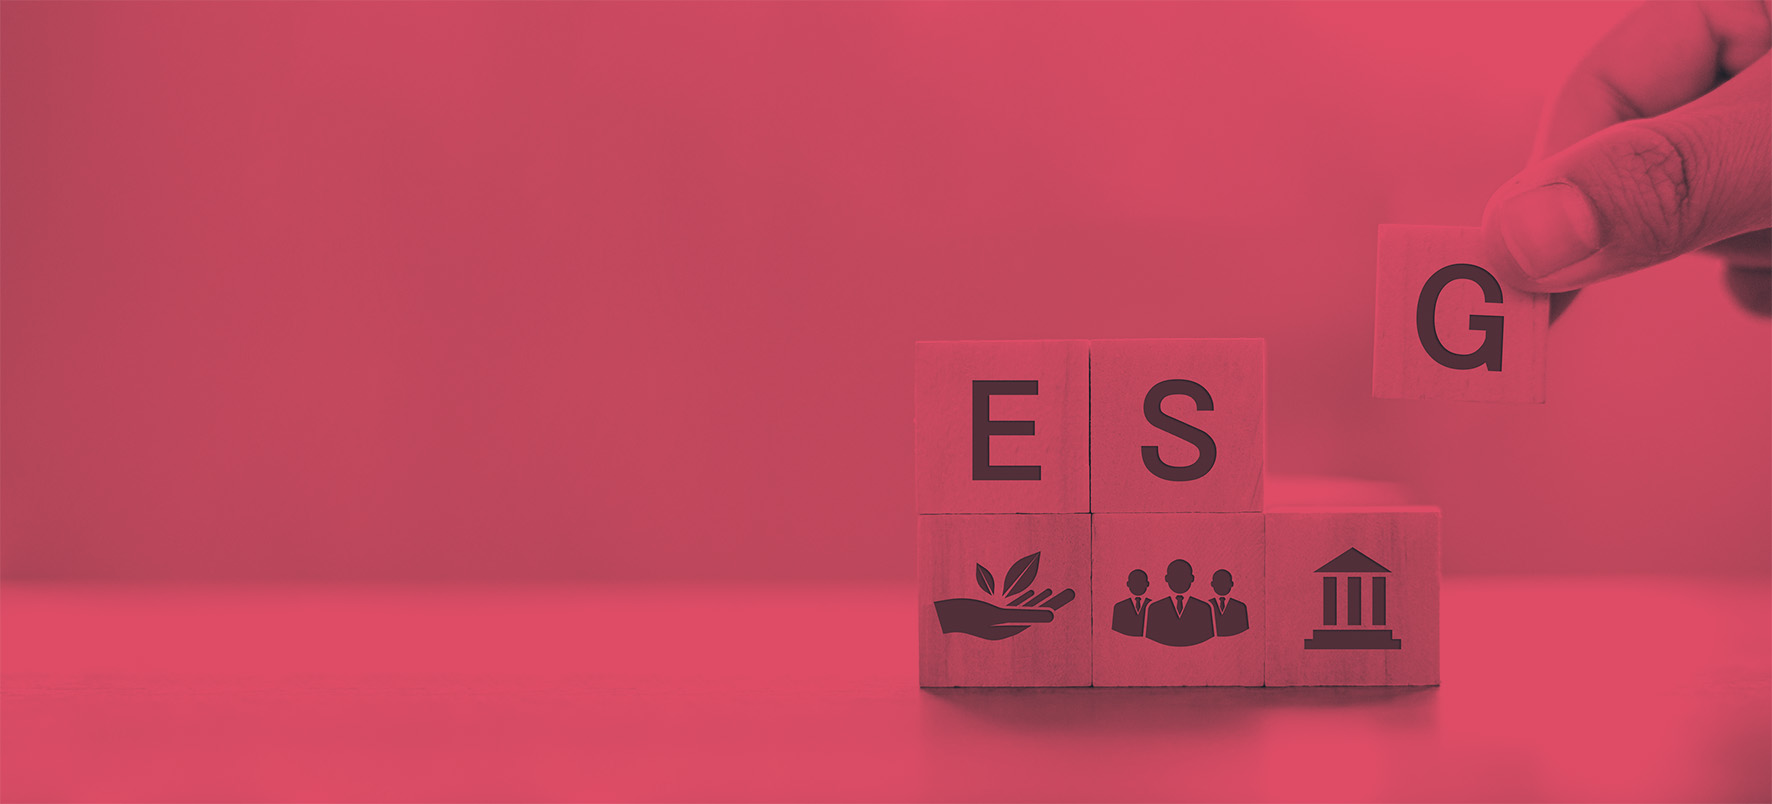 ESG – Environmental, Social and Governance